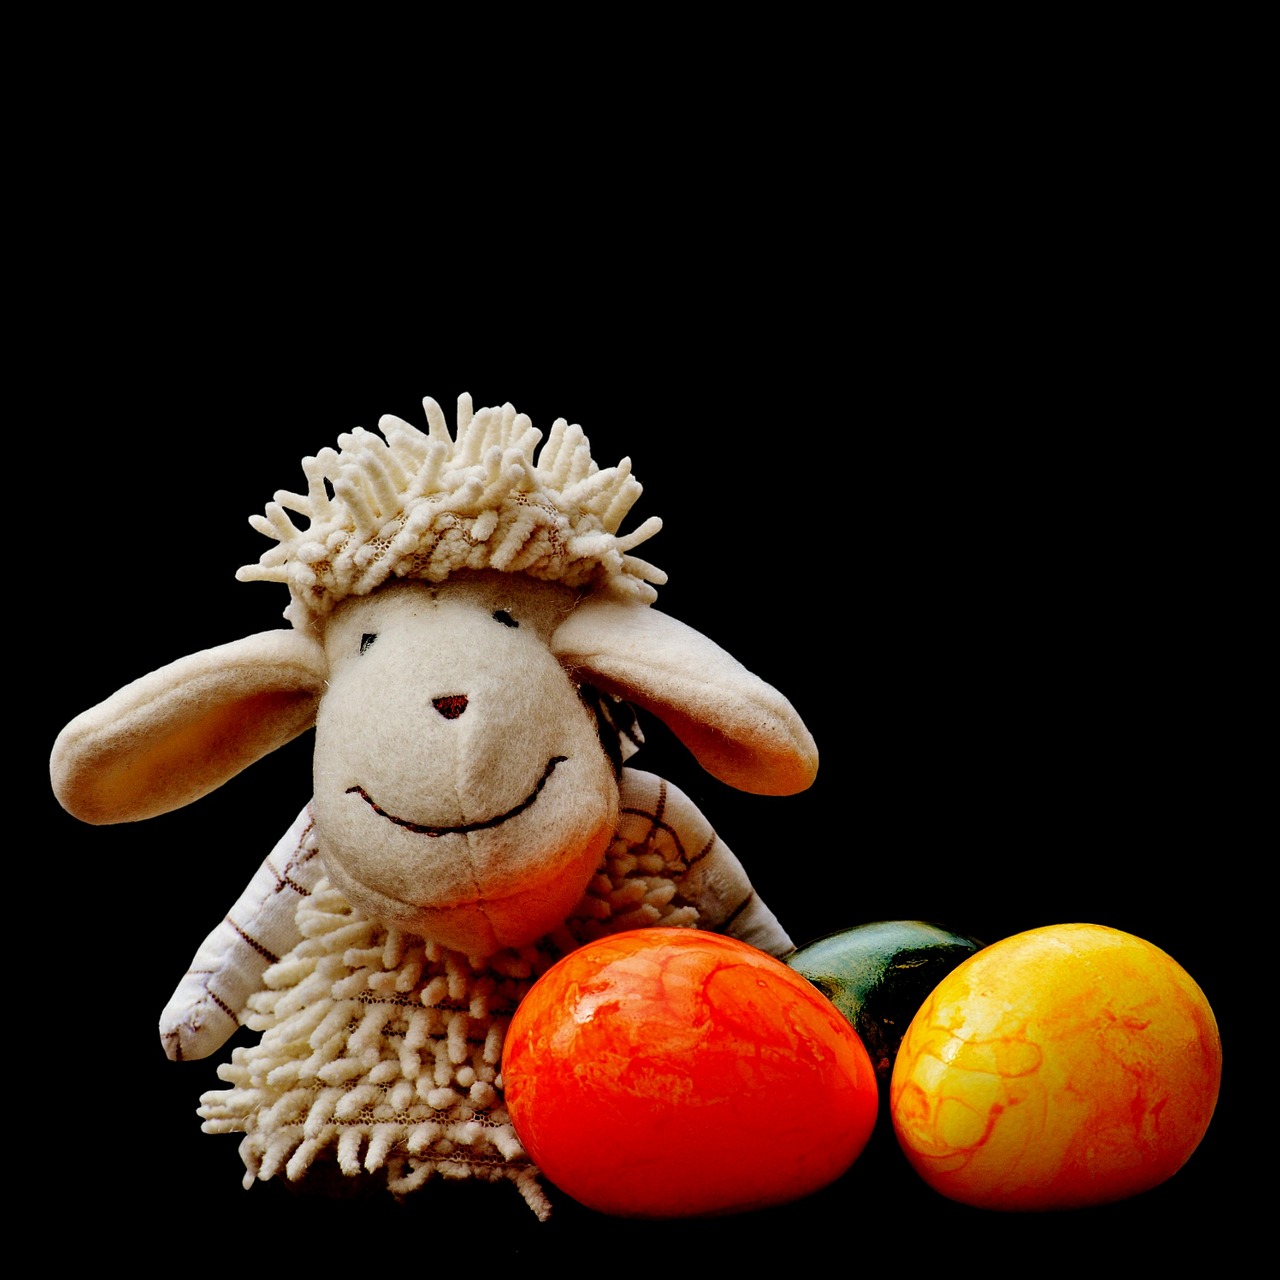 sheep egg colorful free photo